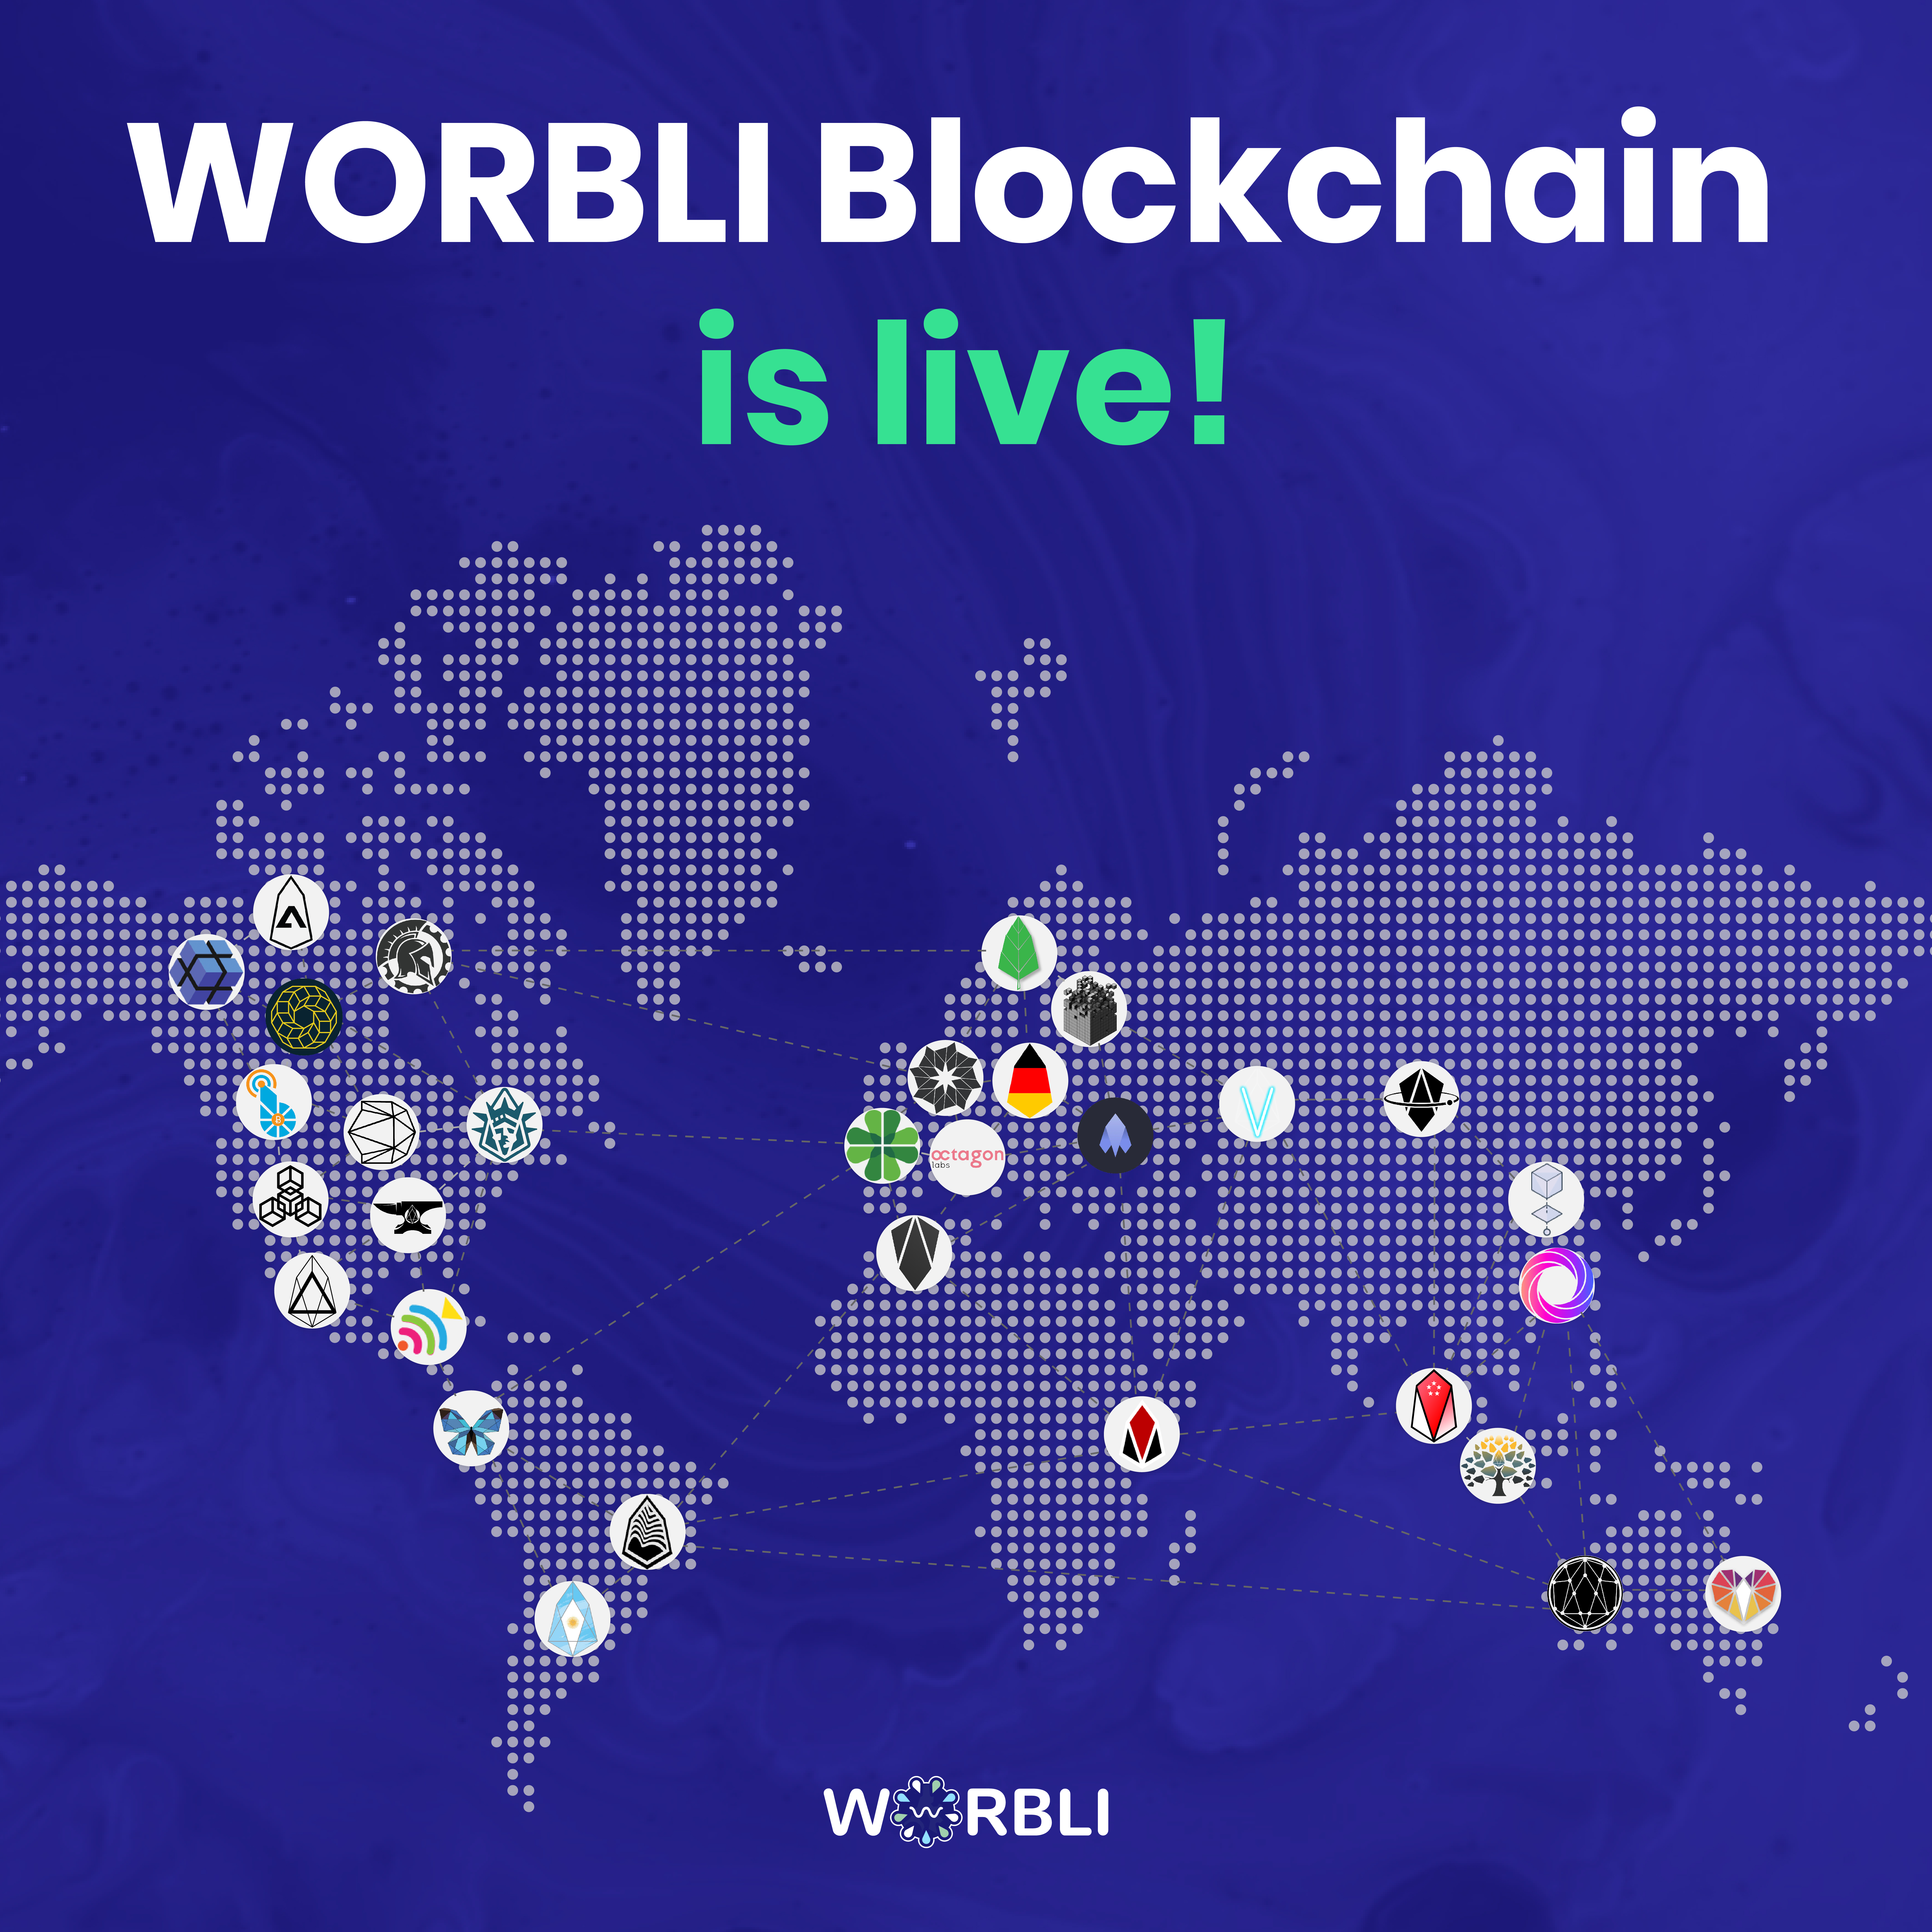 Blockchain: A New Blockchain Called WORBLI Goes Live